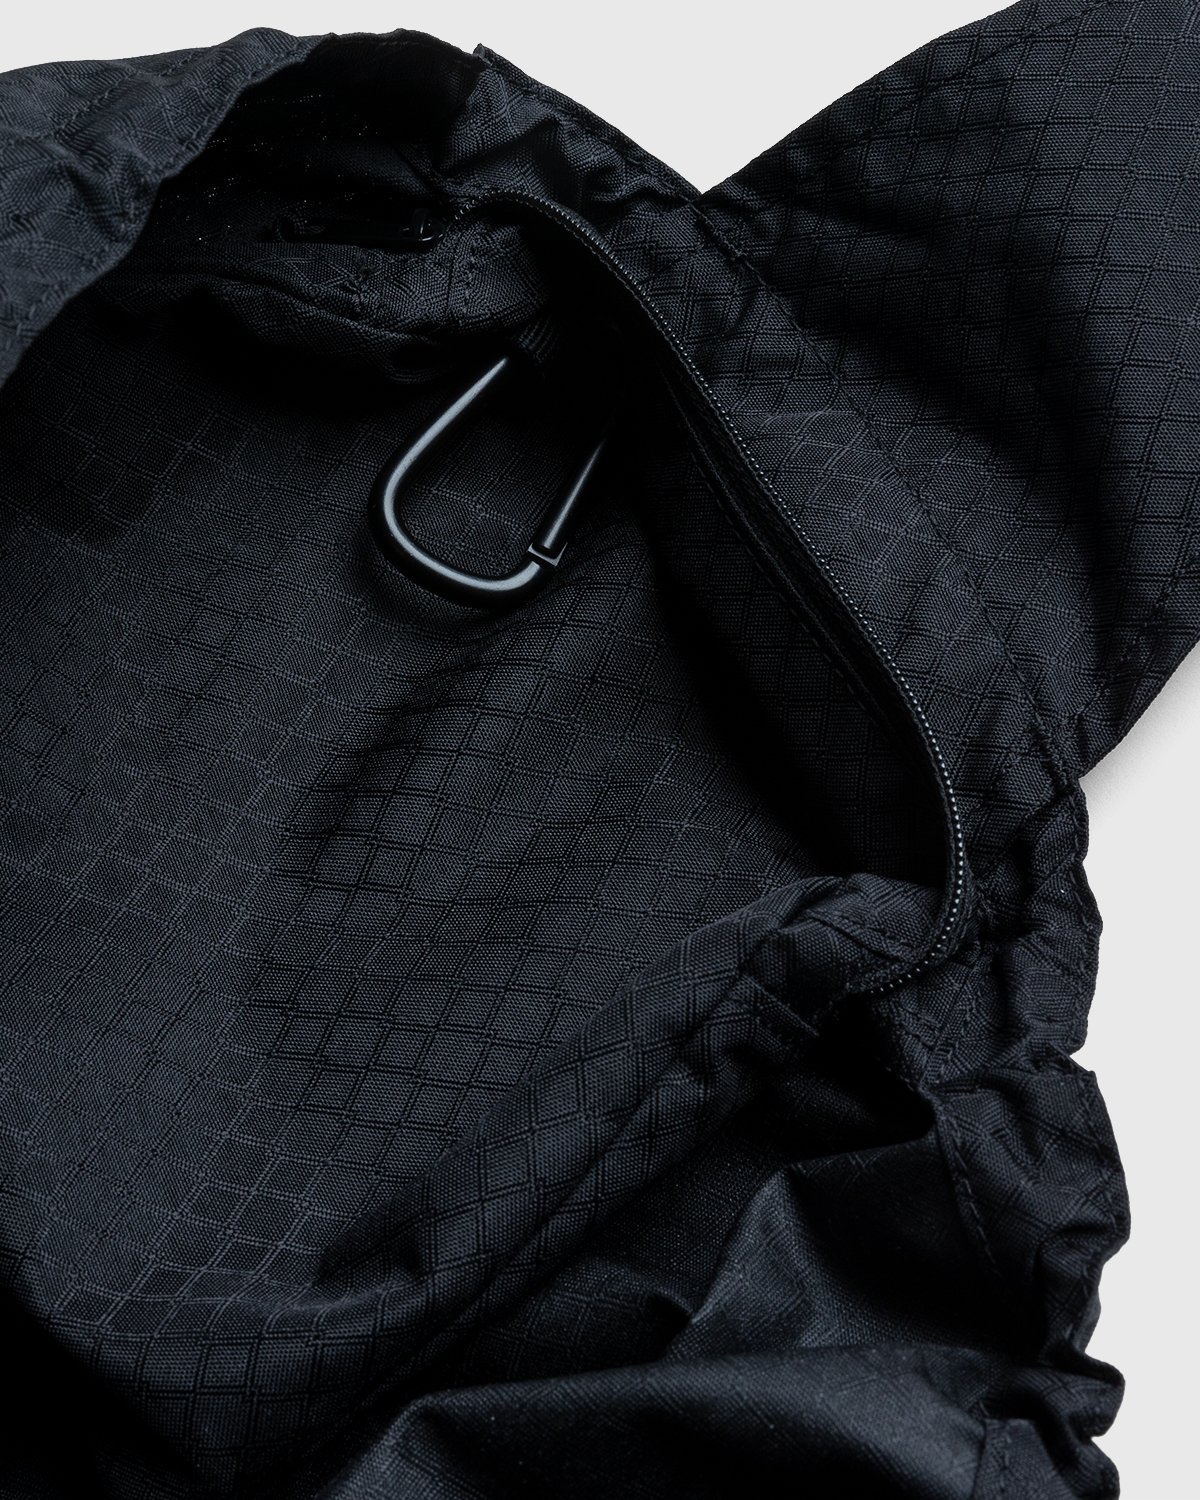 Patta - Diamond Packable Tote Bag Black - Accessories - Black - Image 6